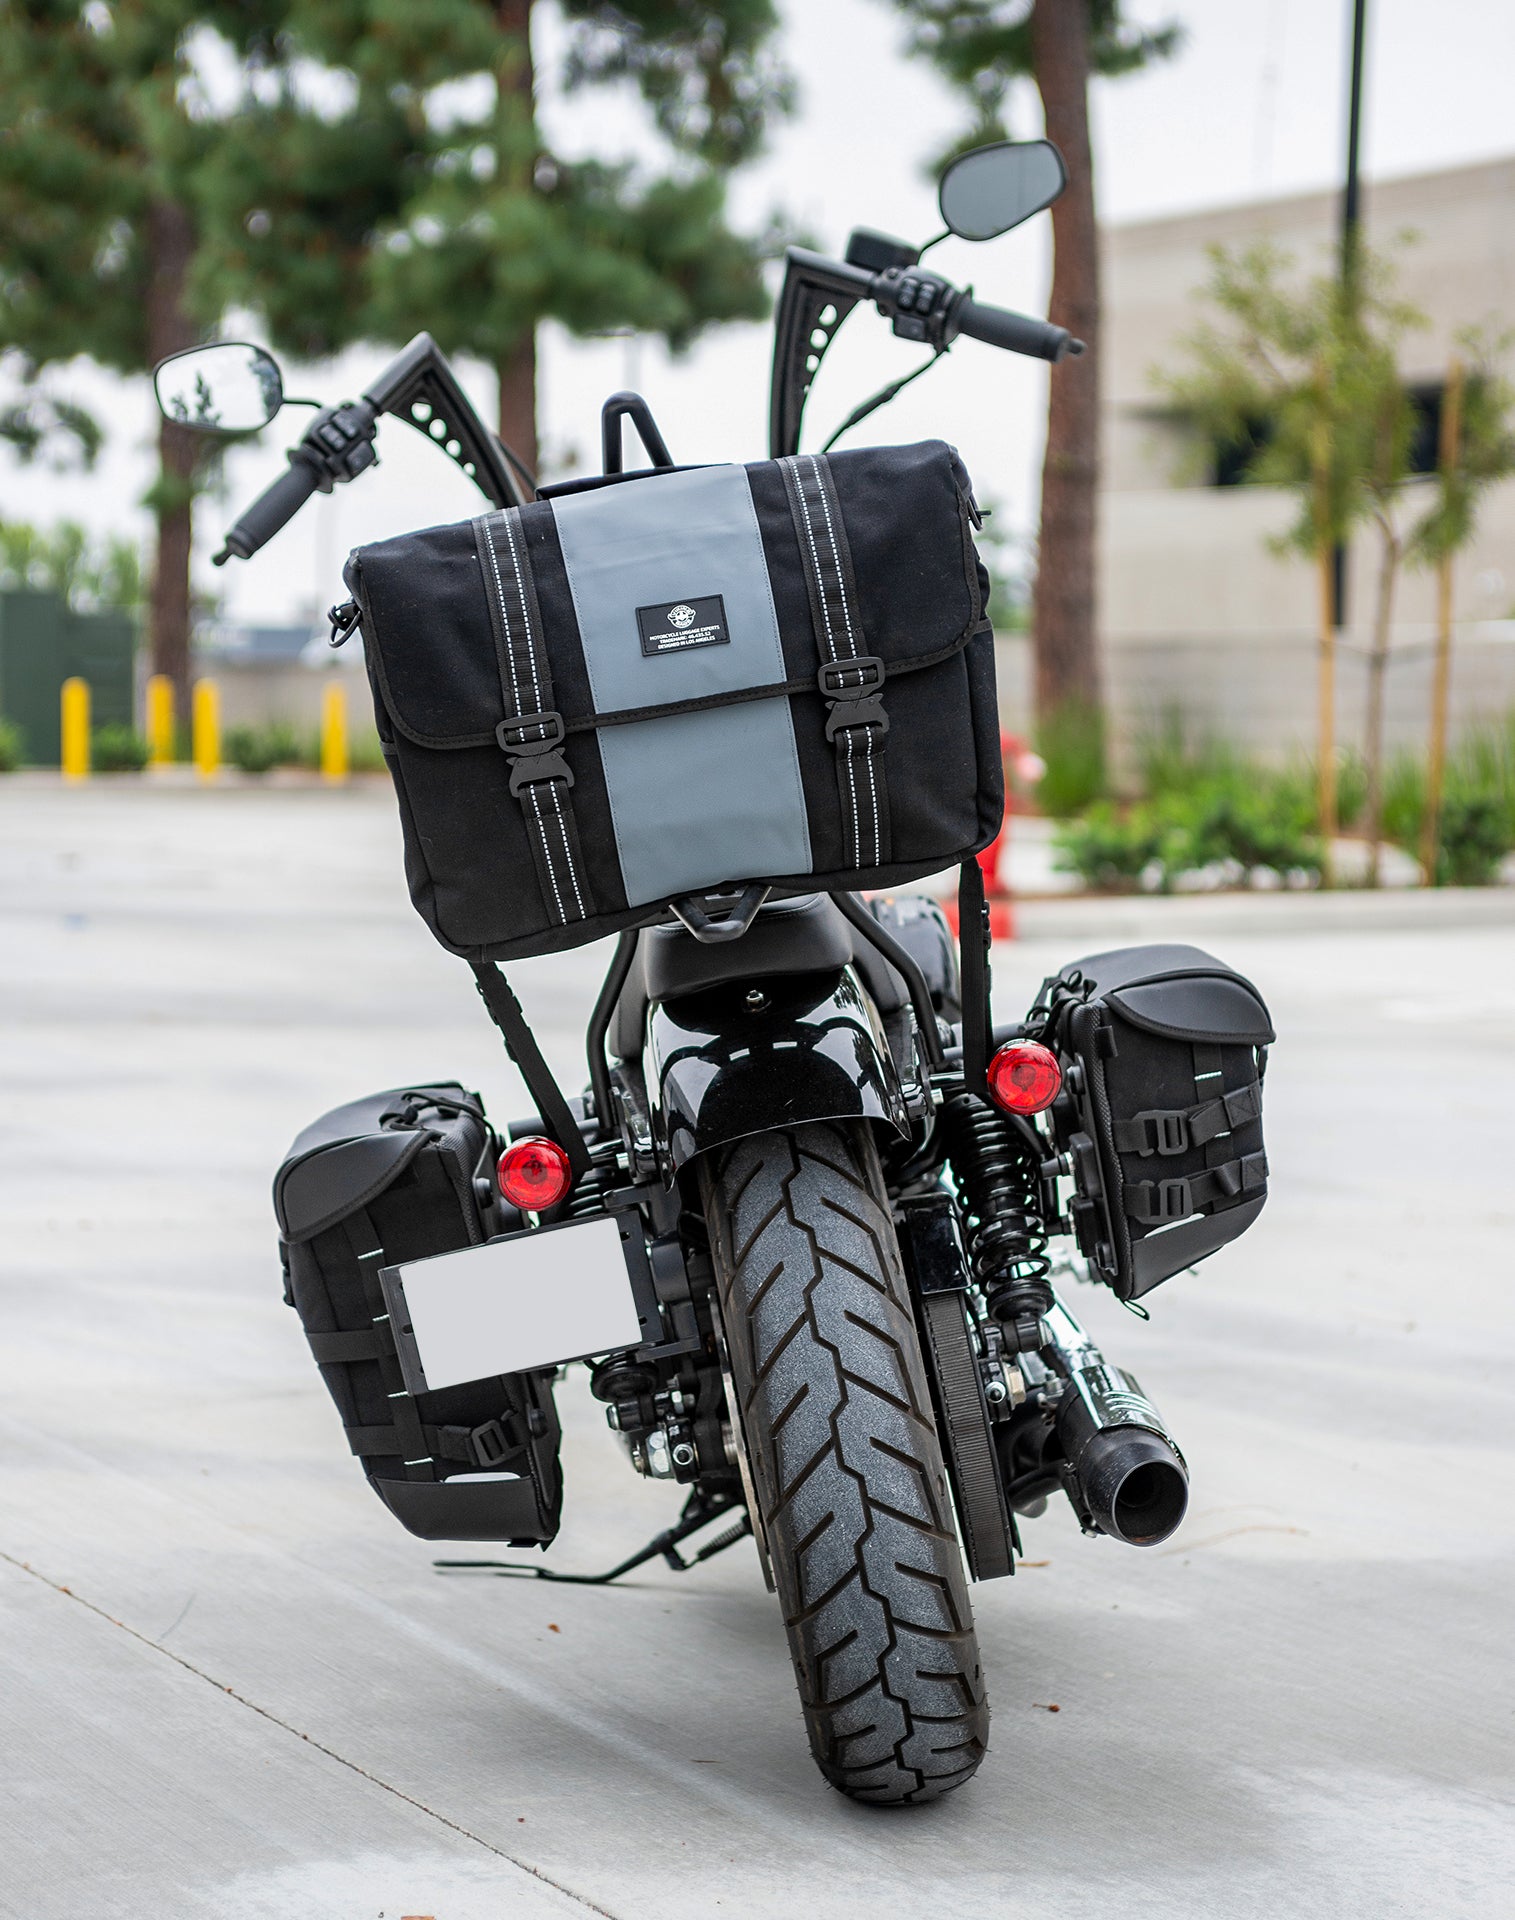 23L - Duo-tone Medium Motorcycle Messenger Bag for Harley Davidson Gray/Black